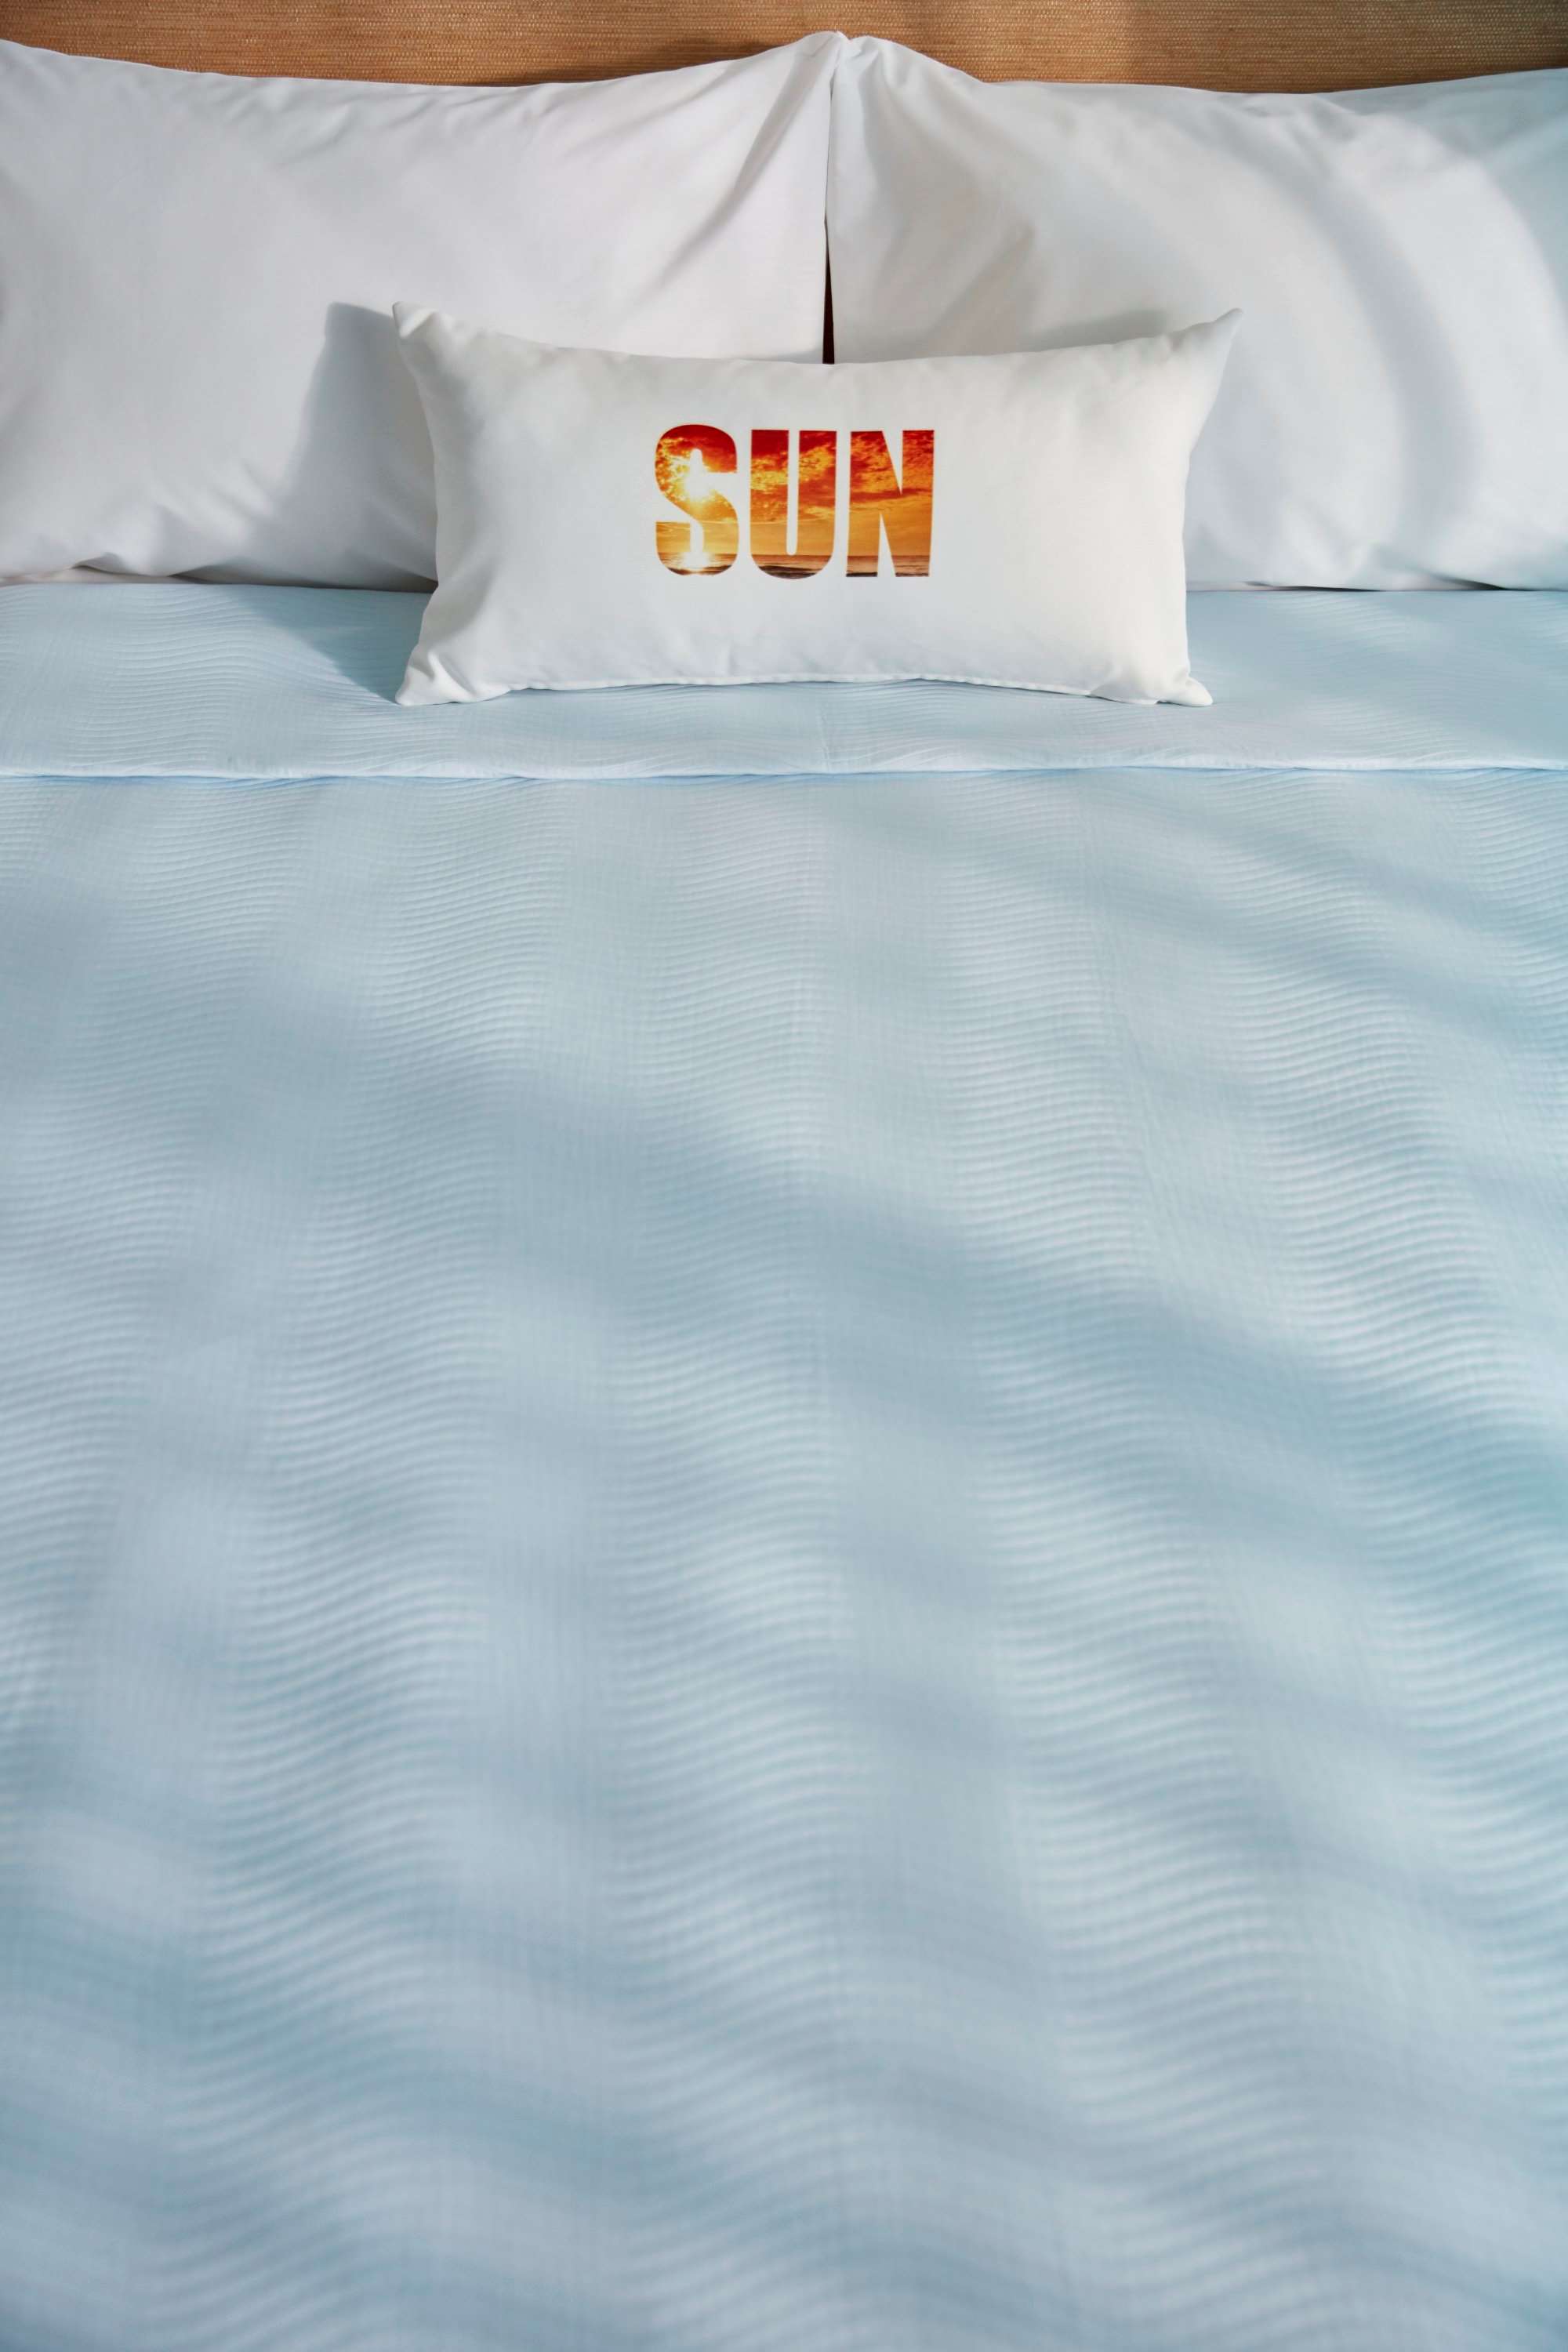 Universal’s Endless Summer Resort - Surfside Inn and Suites